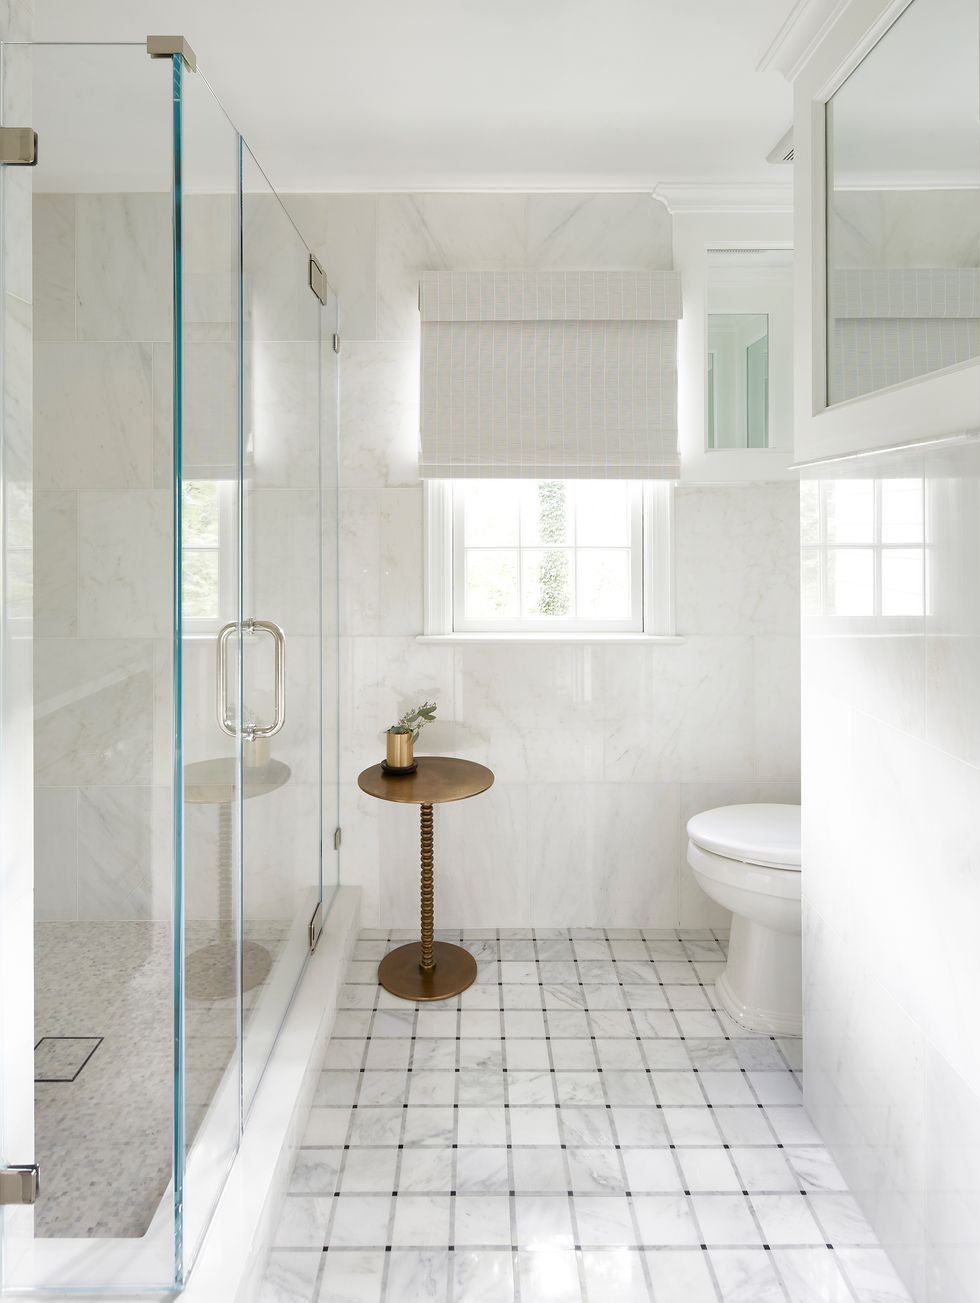 9 Space-Saving Bathroom Towel Storage Ideas For Small Bathrooms